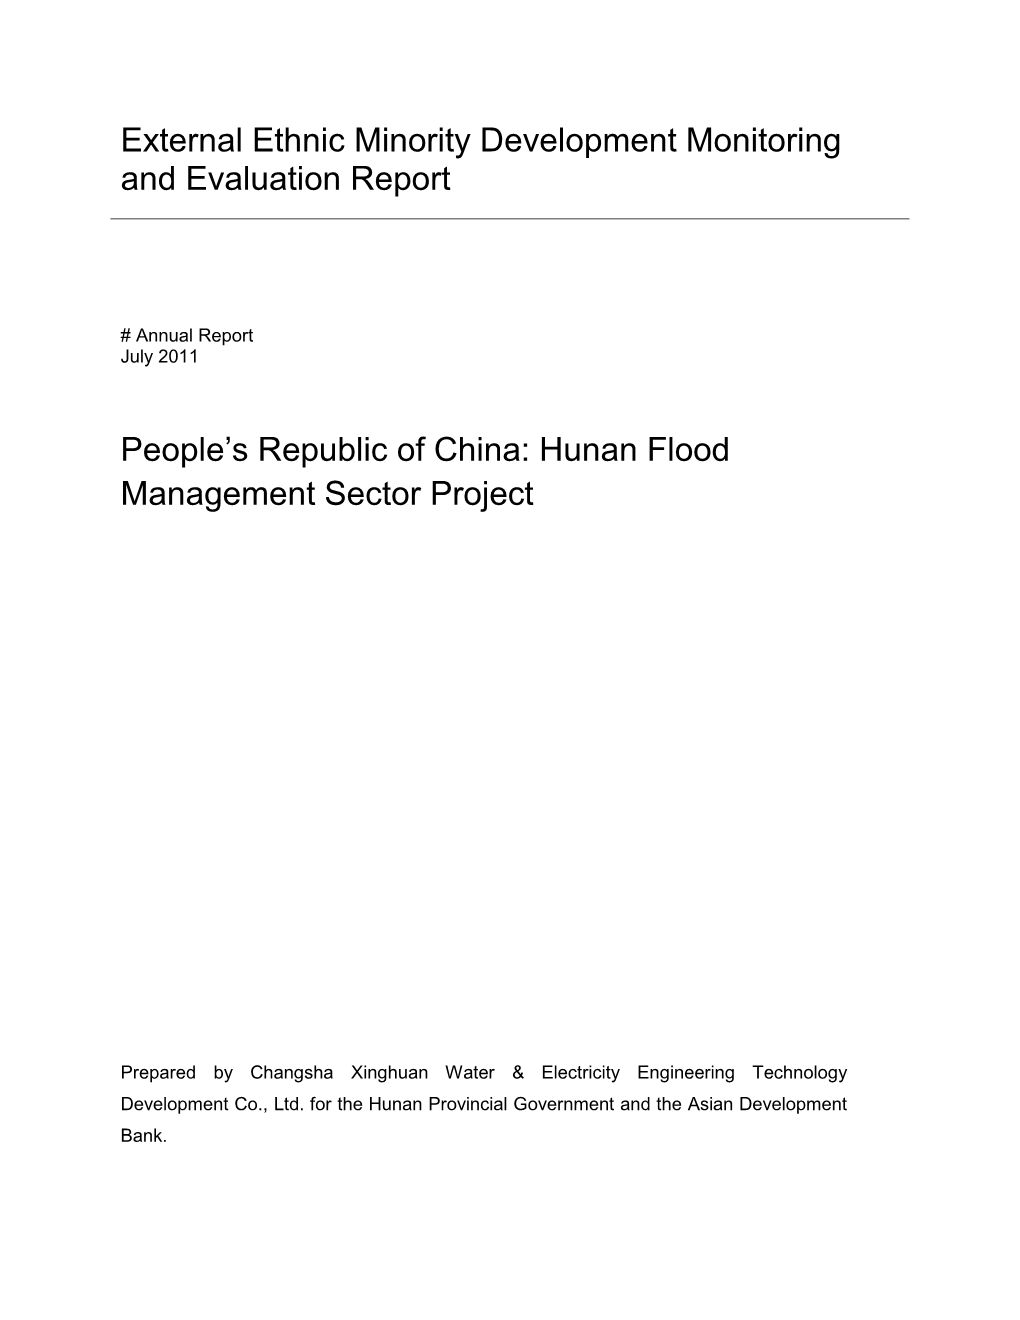 SMR: PRC: Hunan Flood Management Sector Project